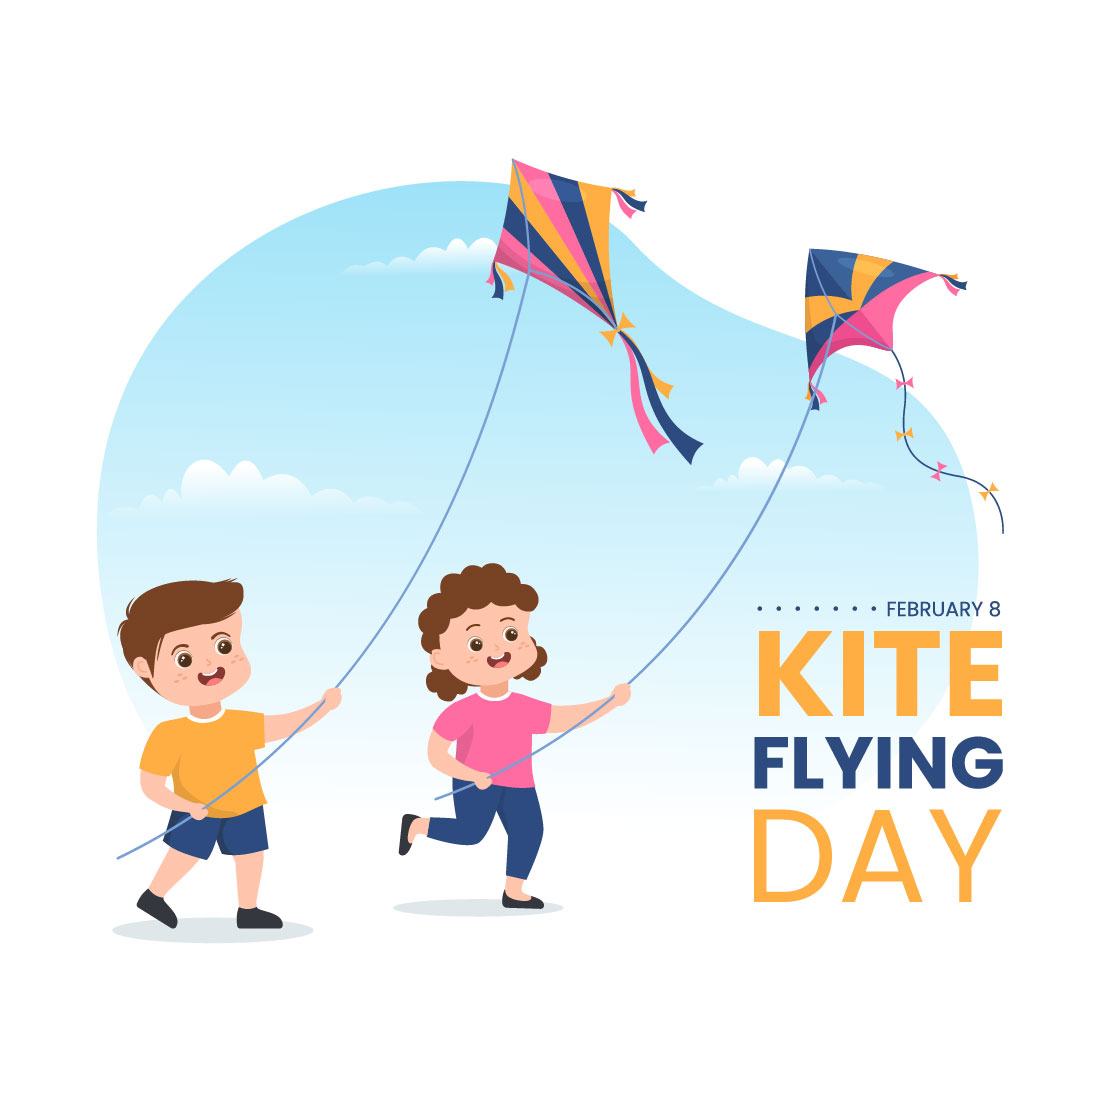 National Kite Flying Day Illustration cover image.